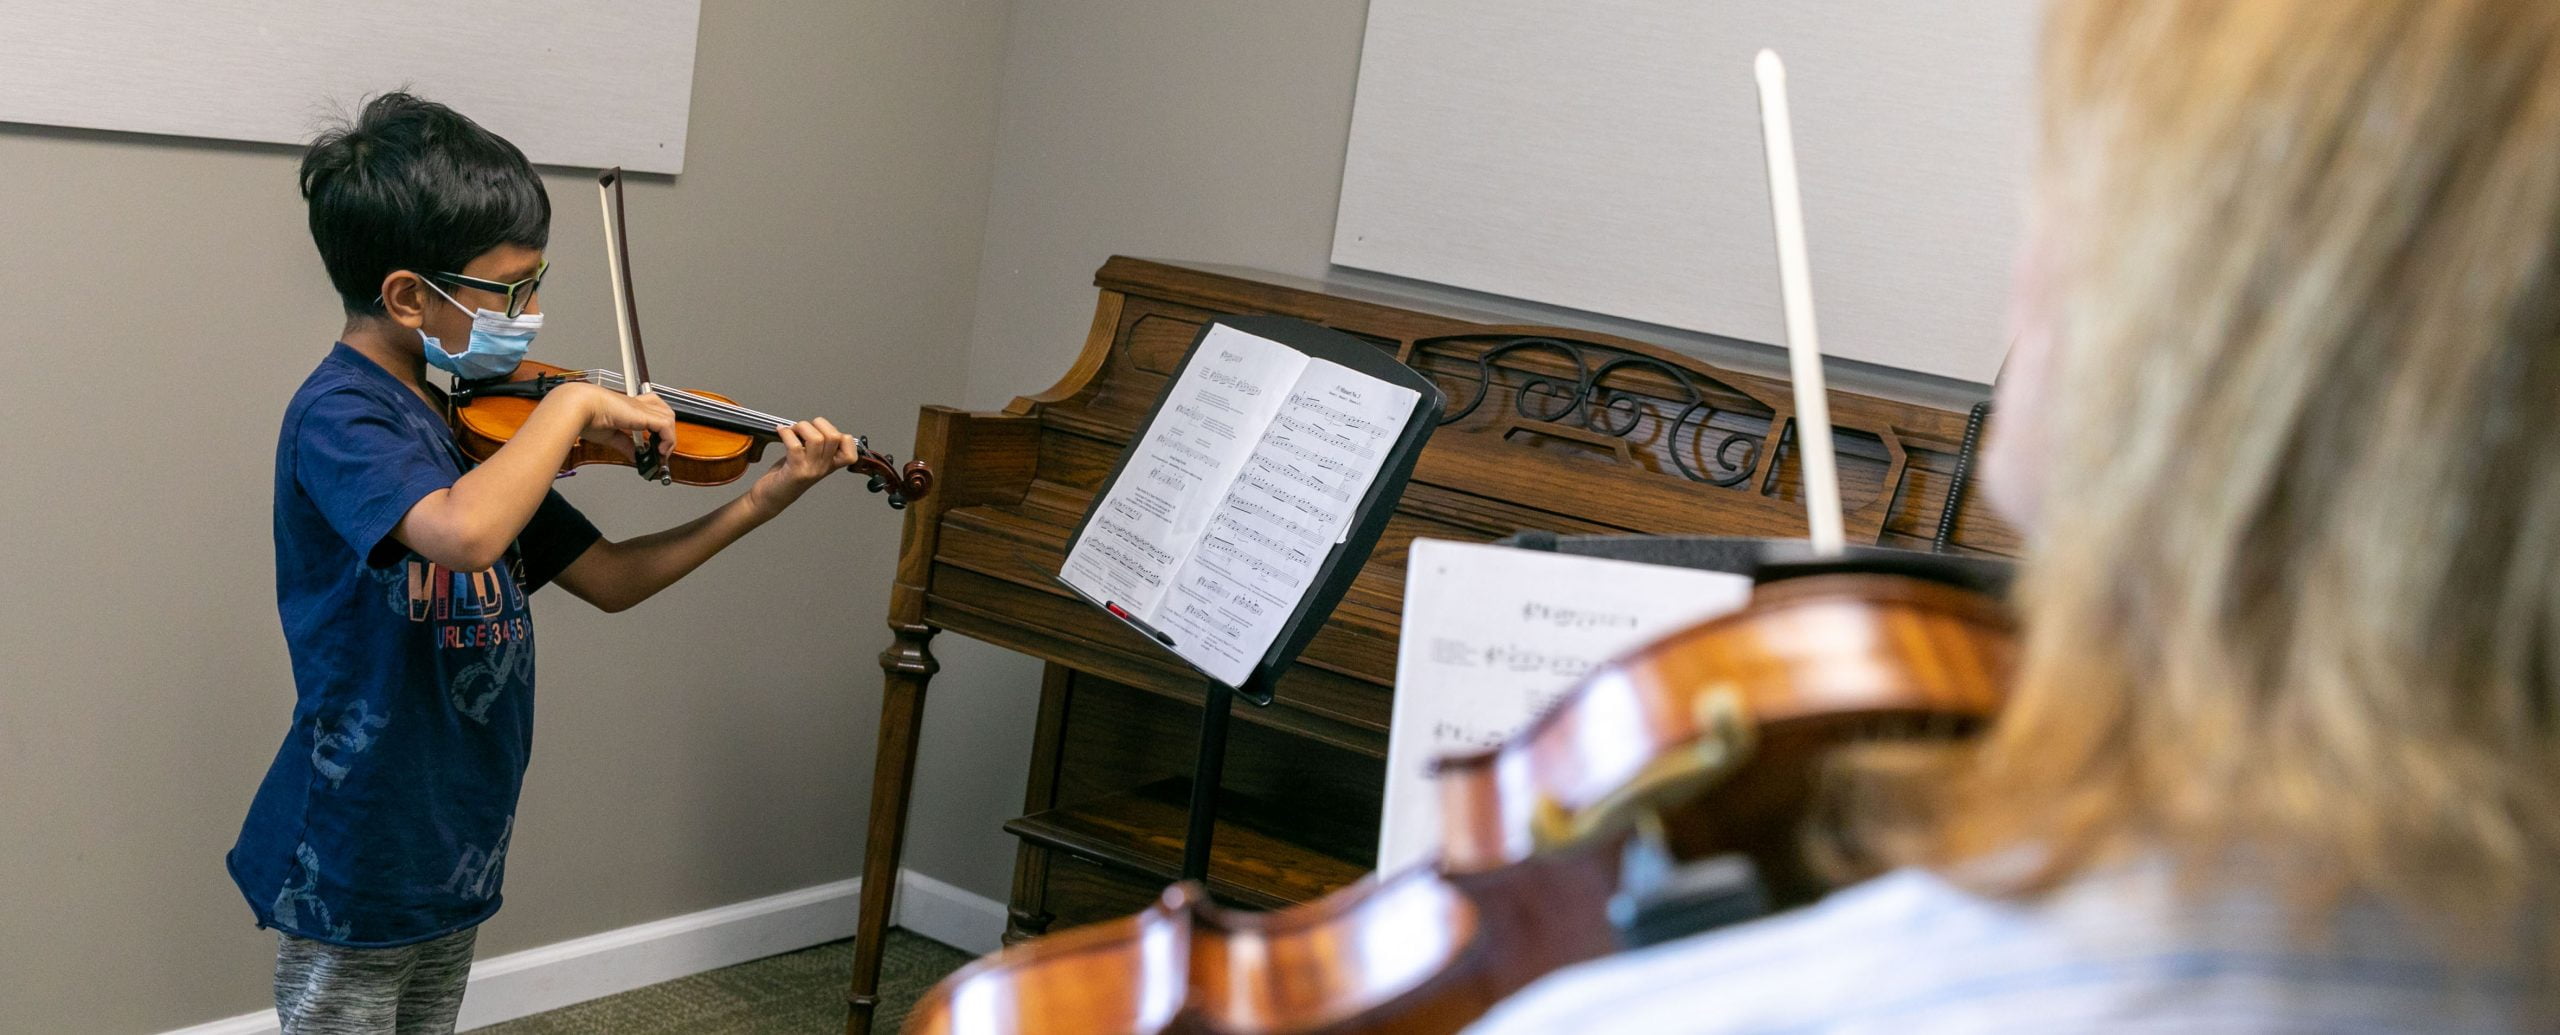 Community Music School - Sid Chitta takes lessons on the violin from teacher Linda Kistler.